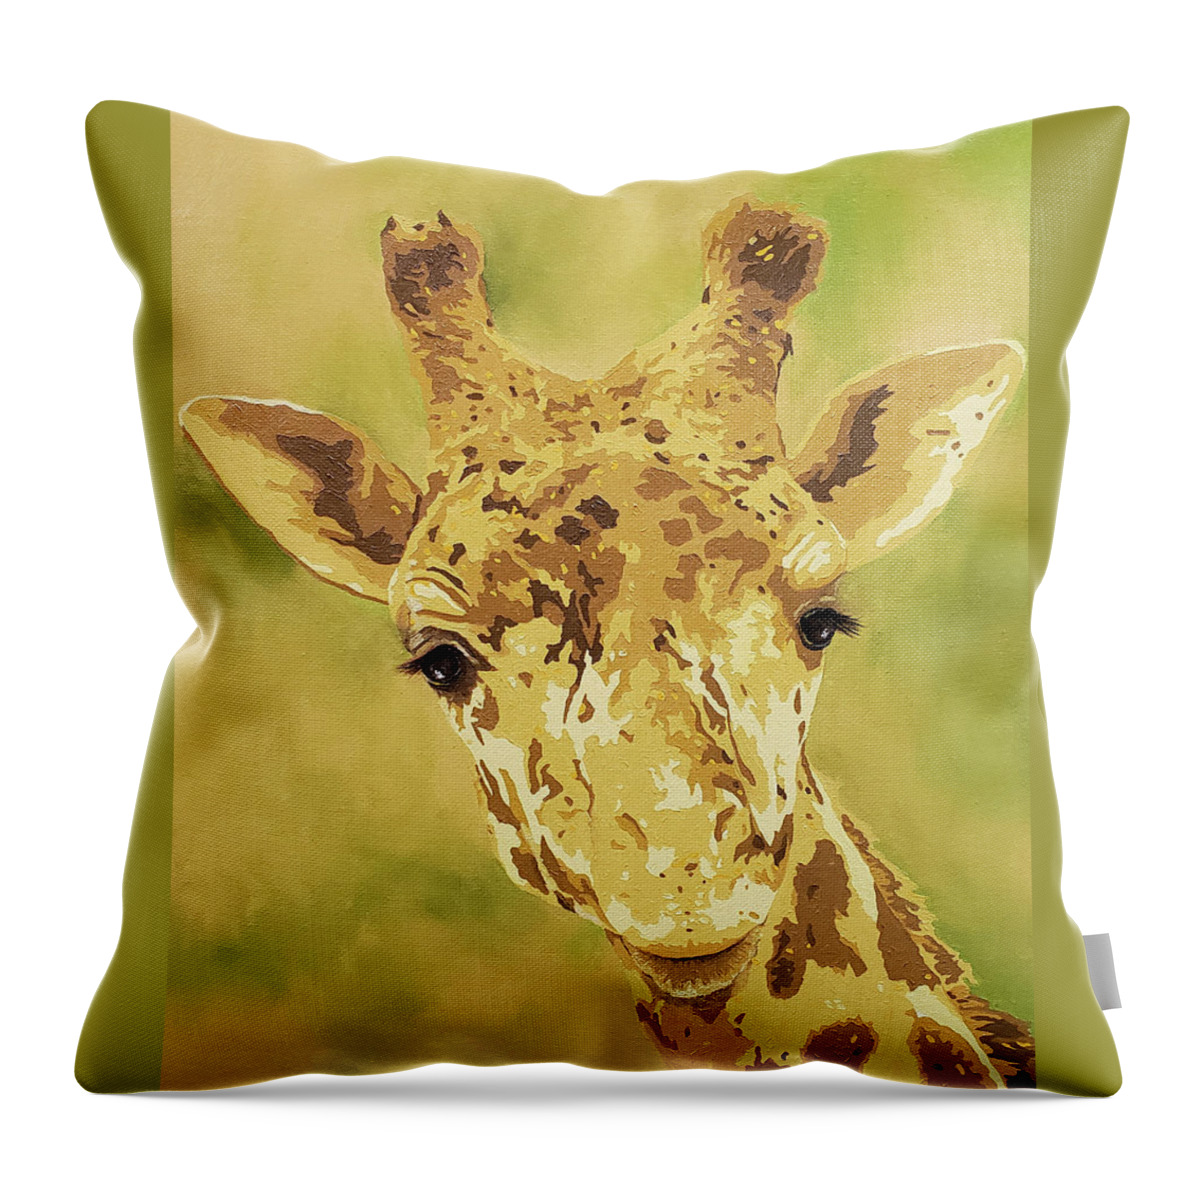 Giraffe Throw Pillow featuring the painting Abeke by Cheryl Bowman